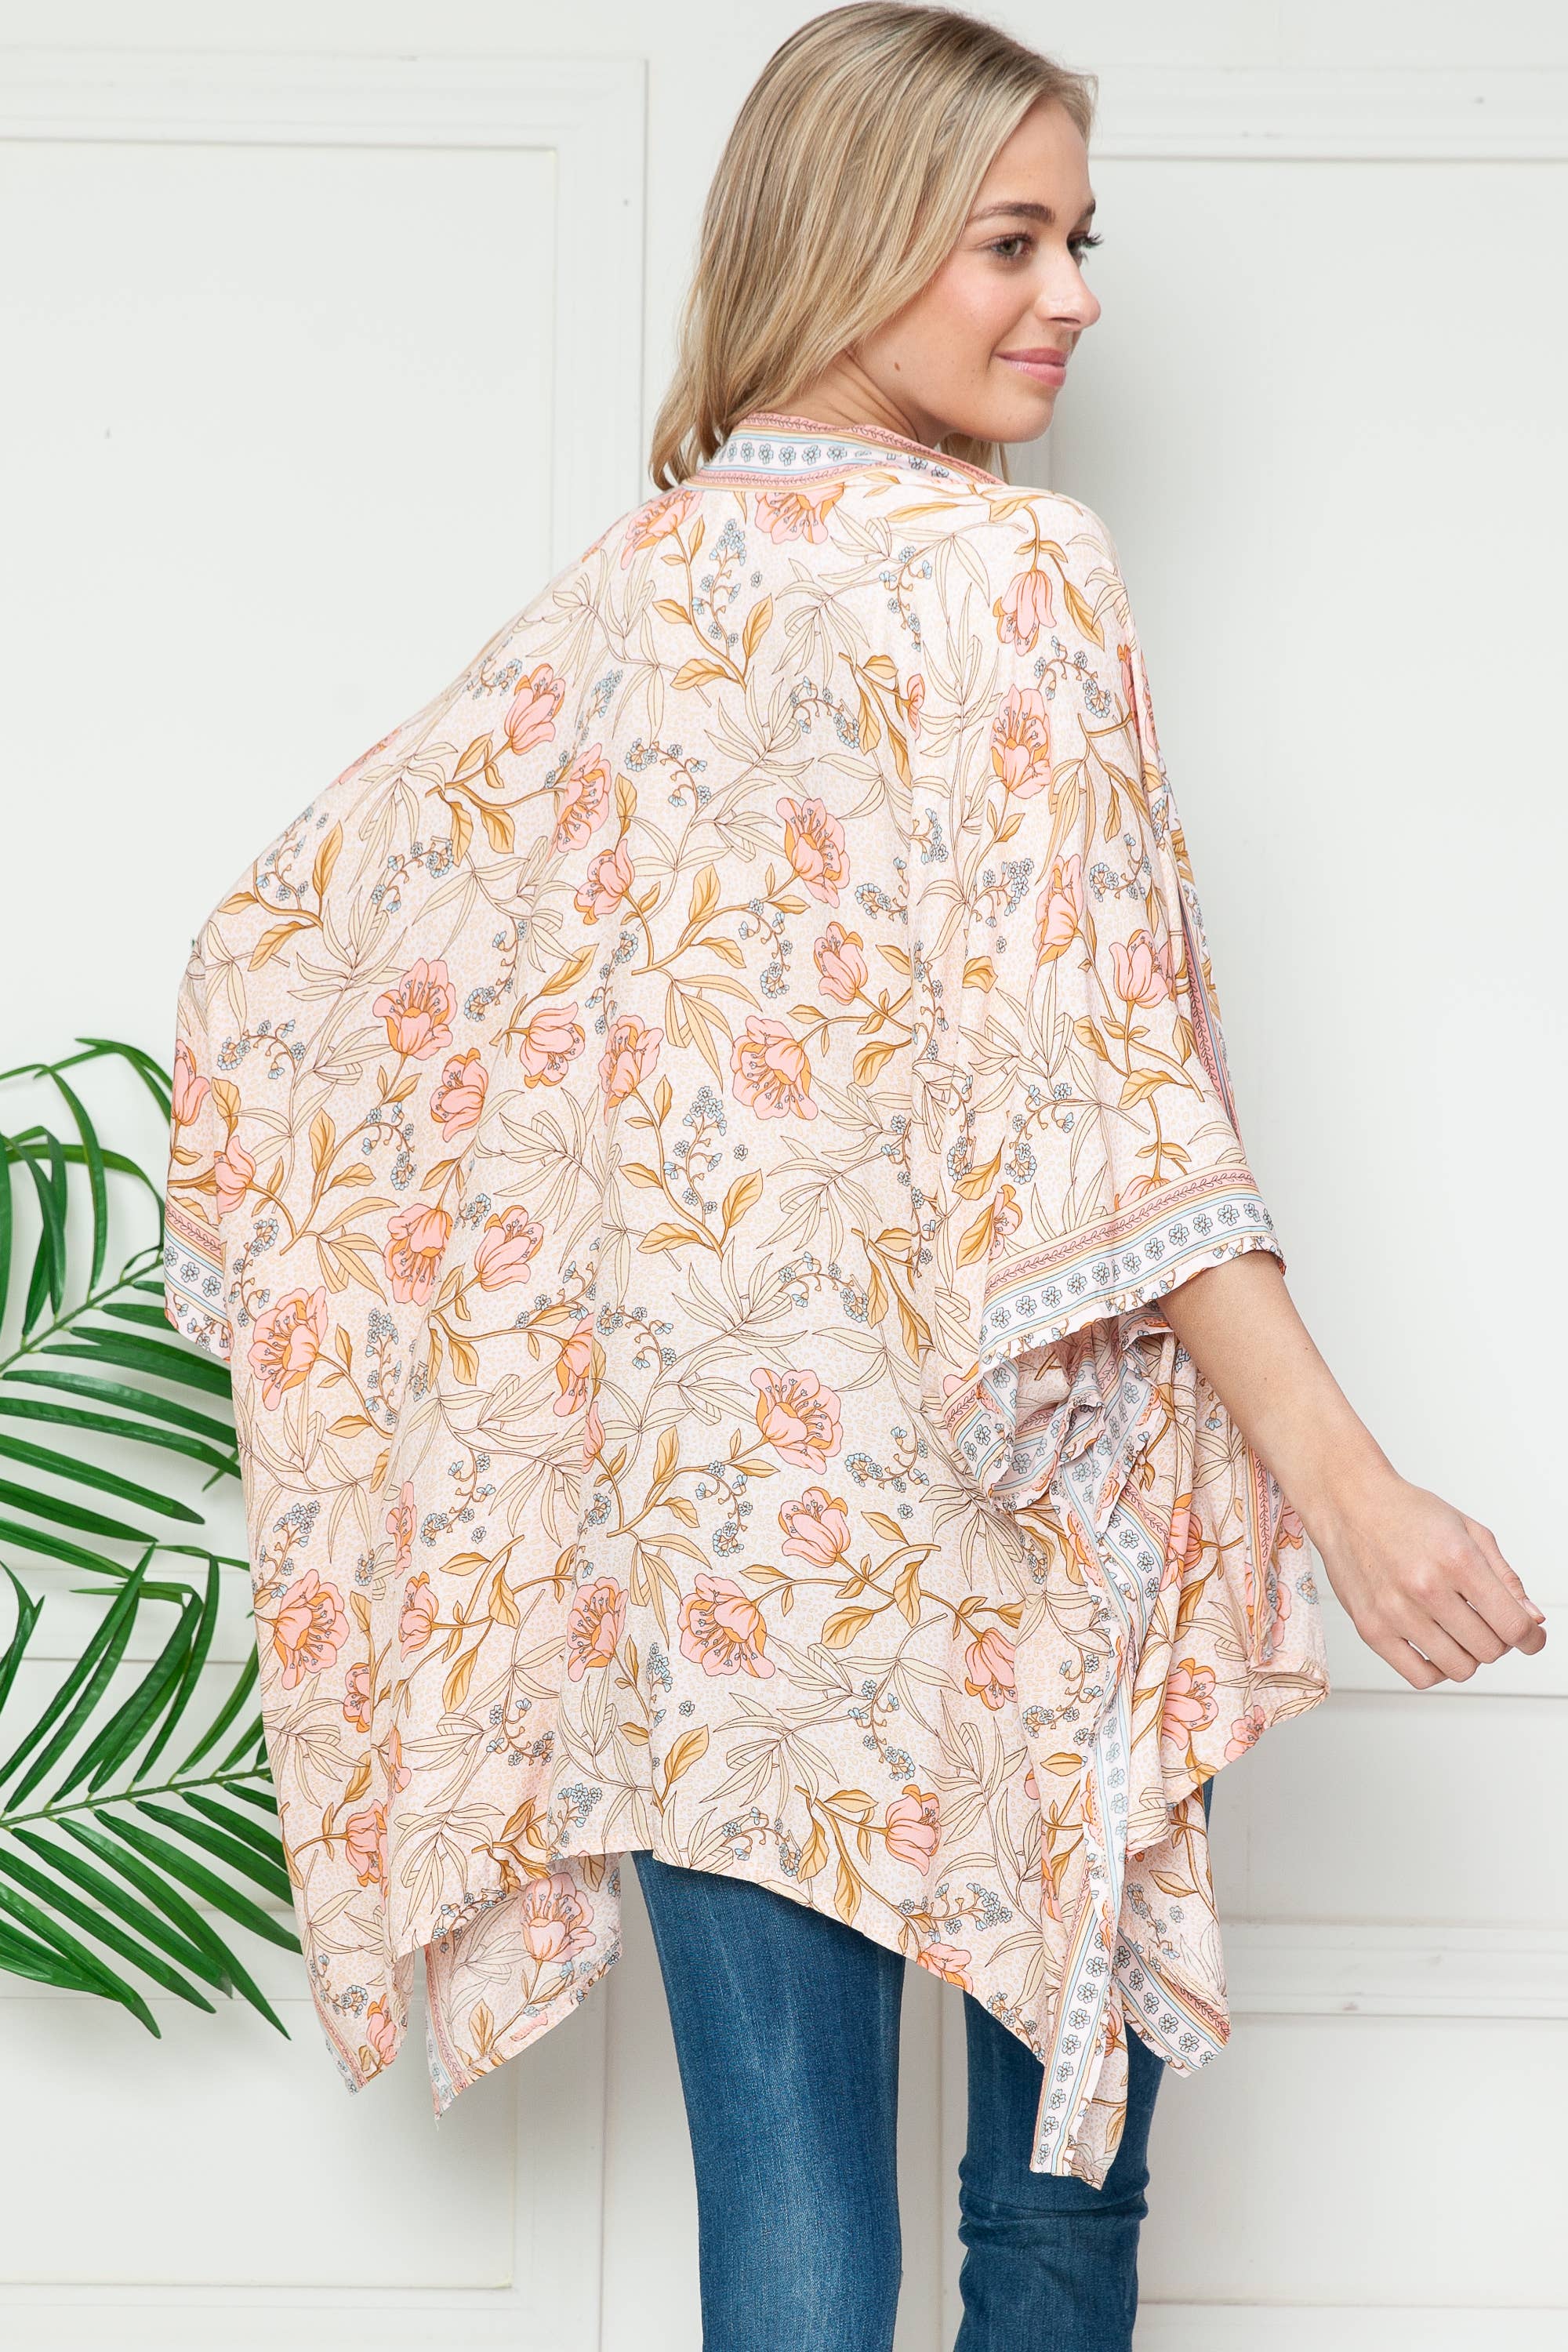 Leaf Chic Cover-Up Kimono